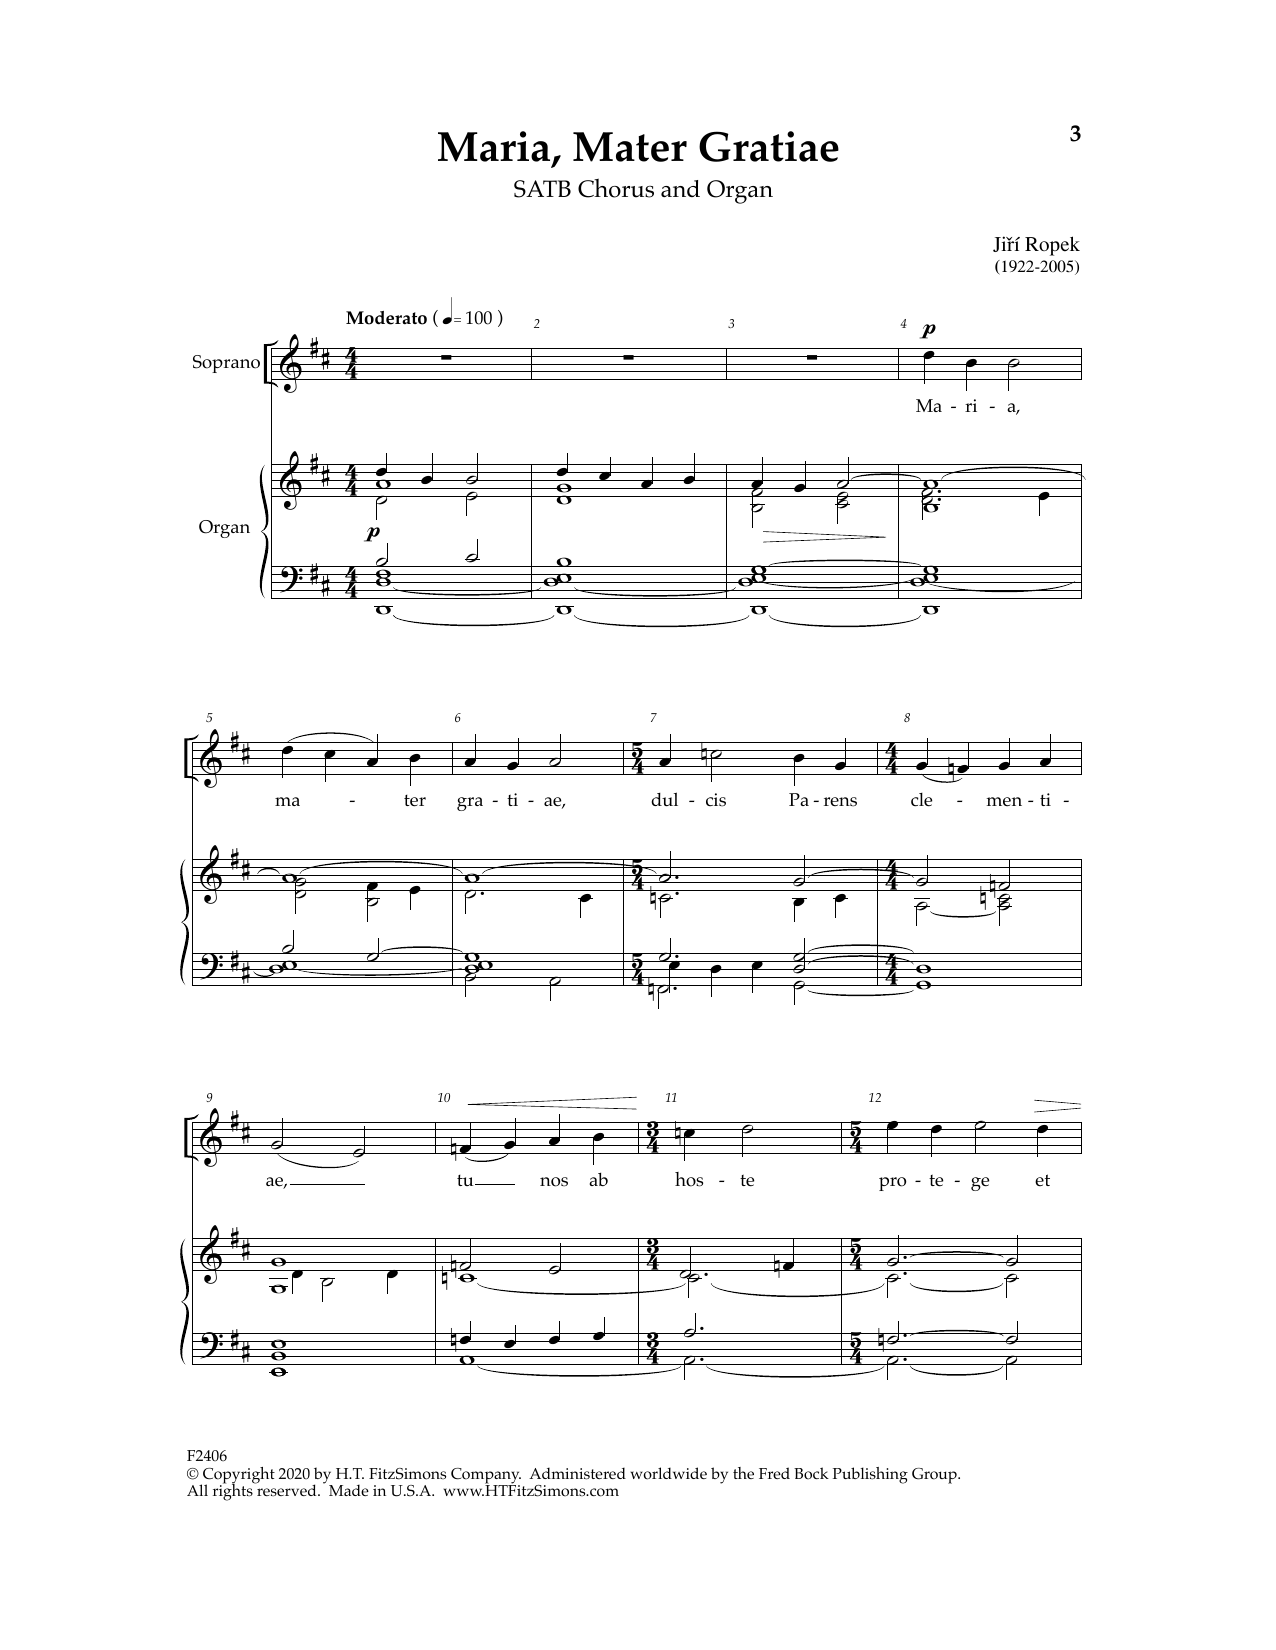 Download Jira Ropek Maria, Mater Gratiae Sheet Music and learn how to play SATB Choir PDF digital score in minutes